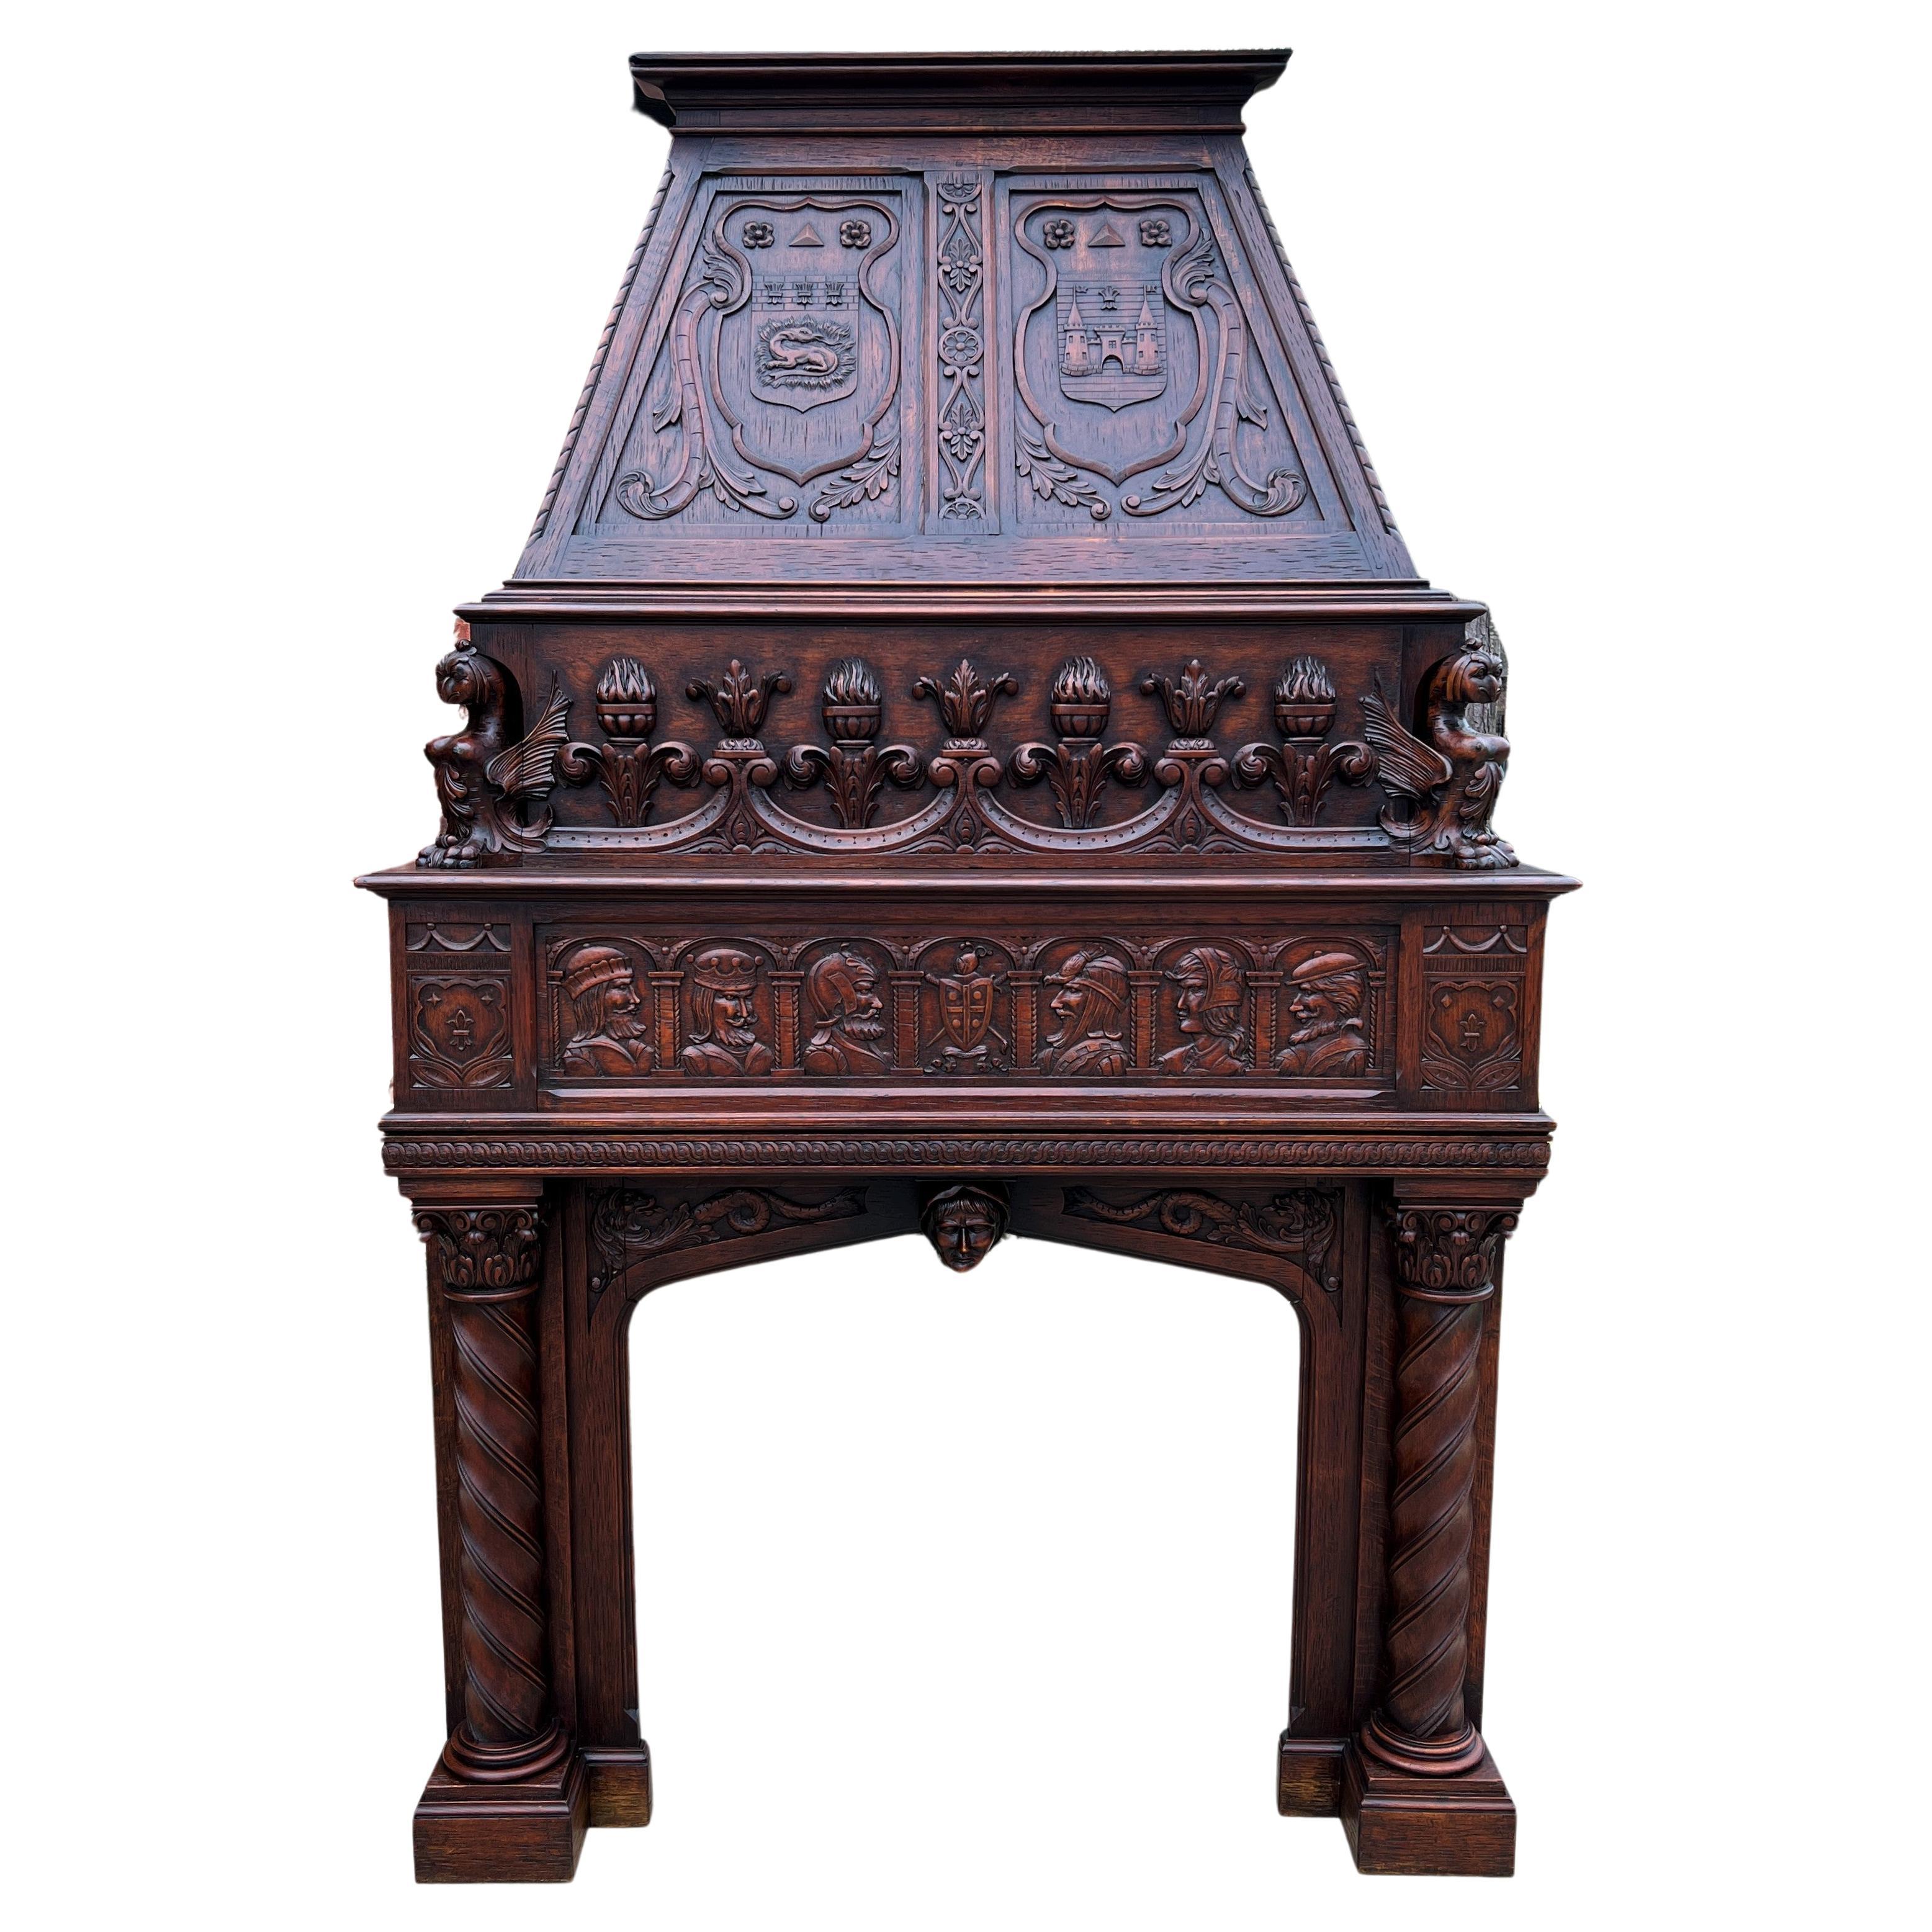 Antique French Fireplace Mantel Surround with Hood Oak Barley Twist Renaissance